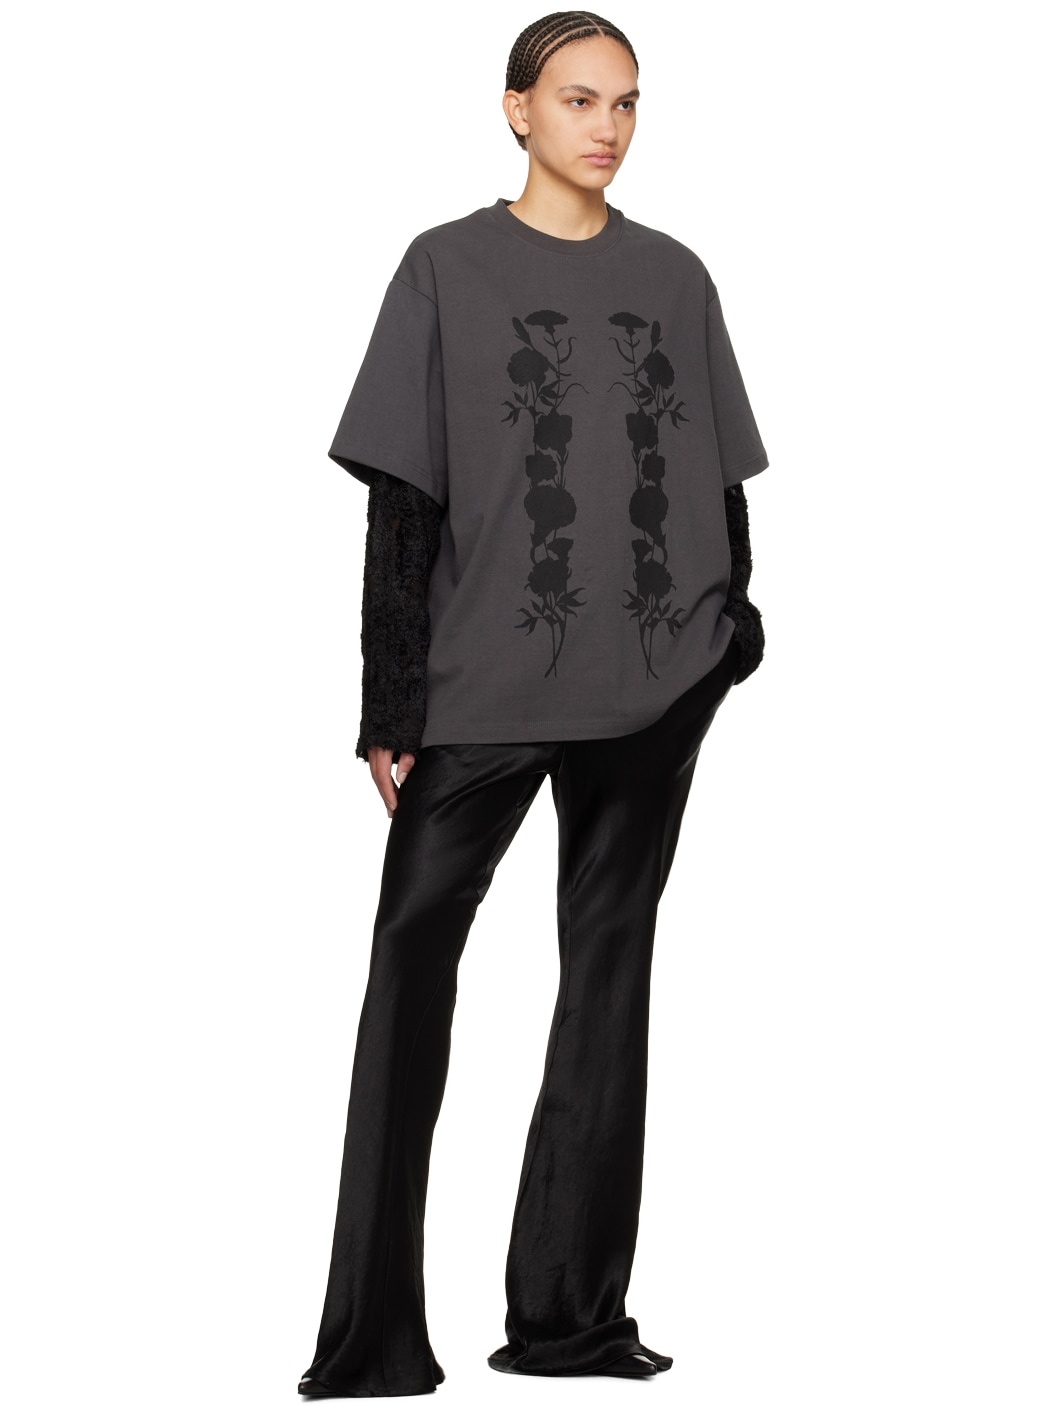 Gray 'Black Foliage' Long Sleeve T-Shirt - 4